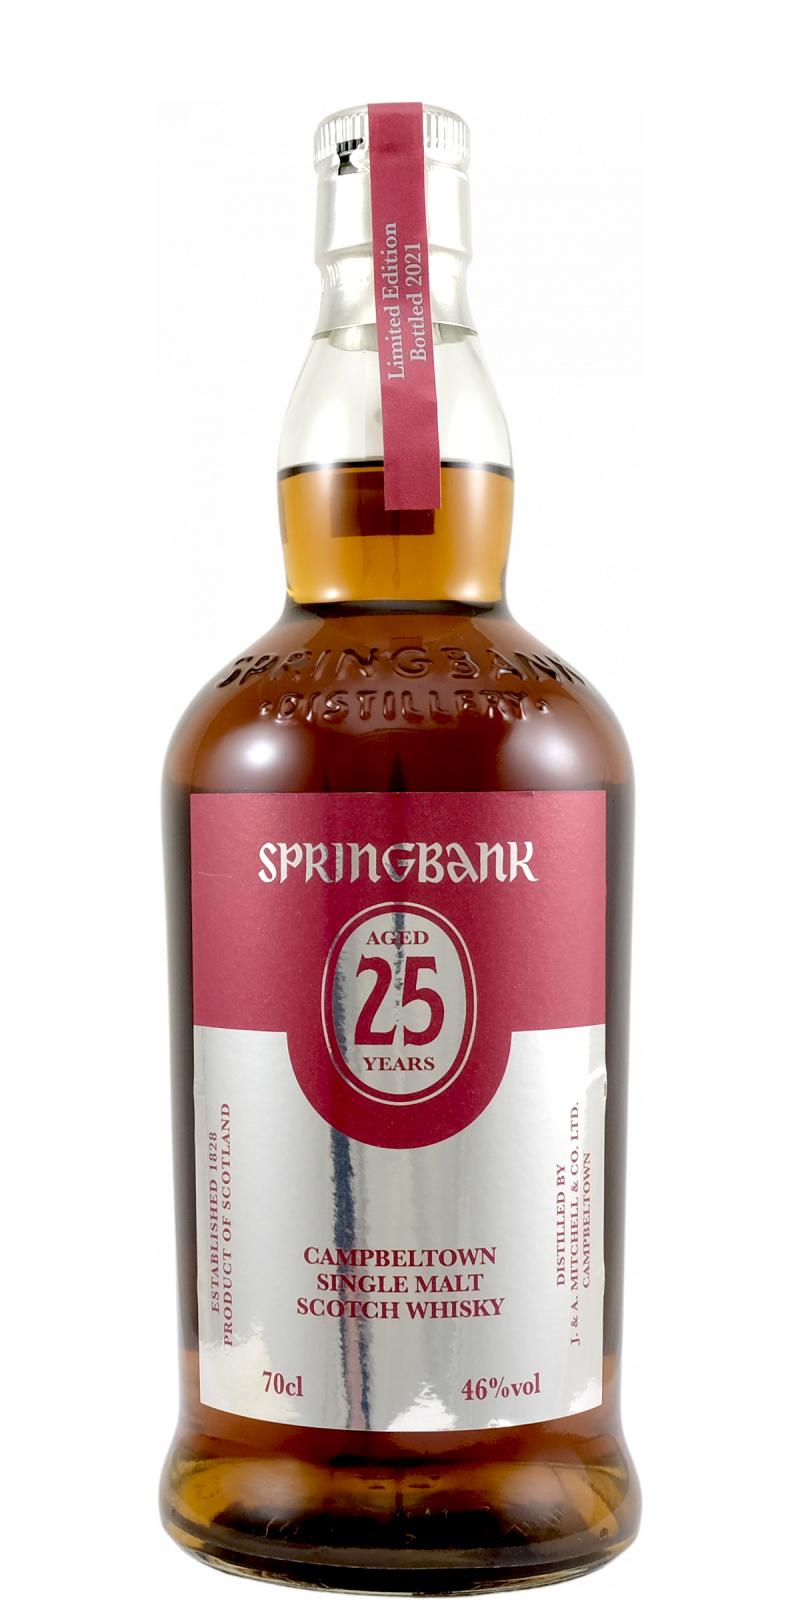 Springbank 25yearold Ratings and reviews Whiskybase